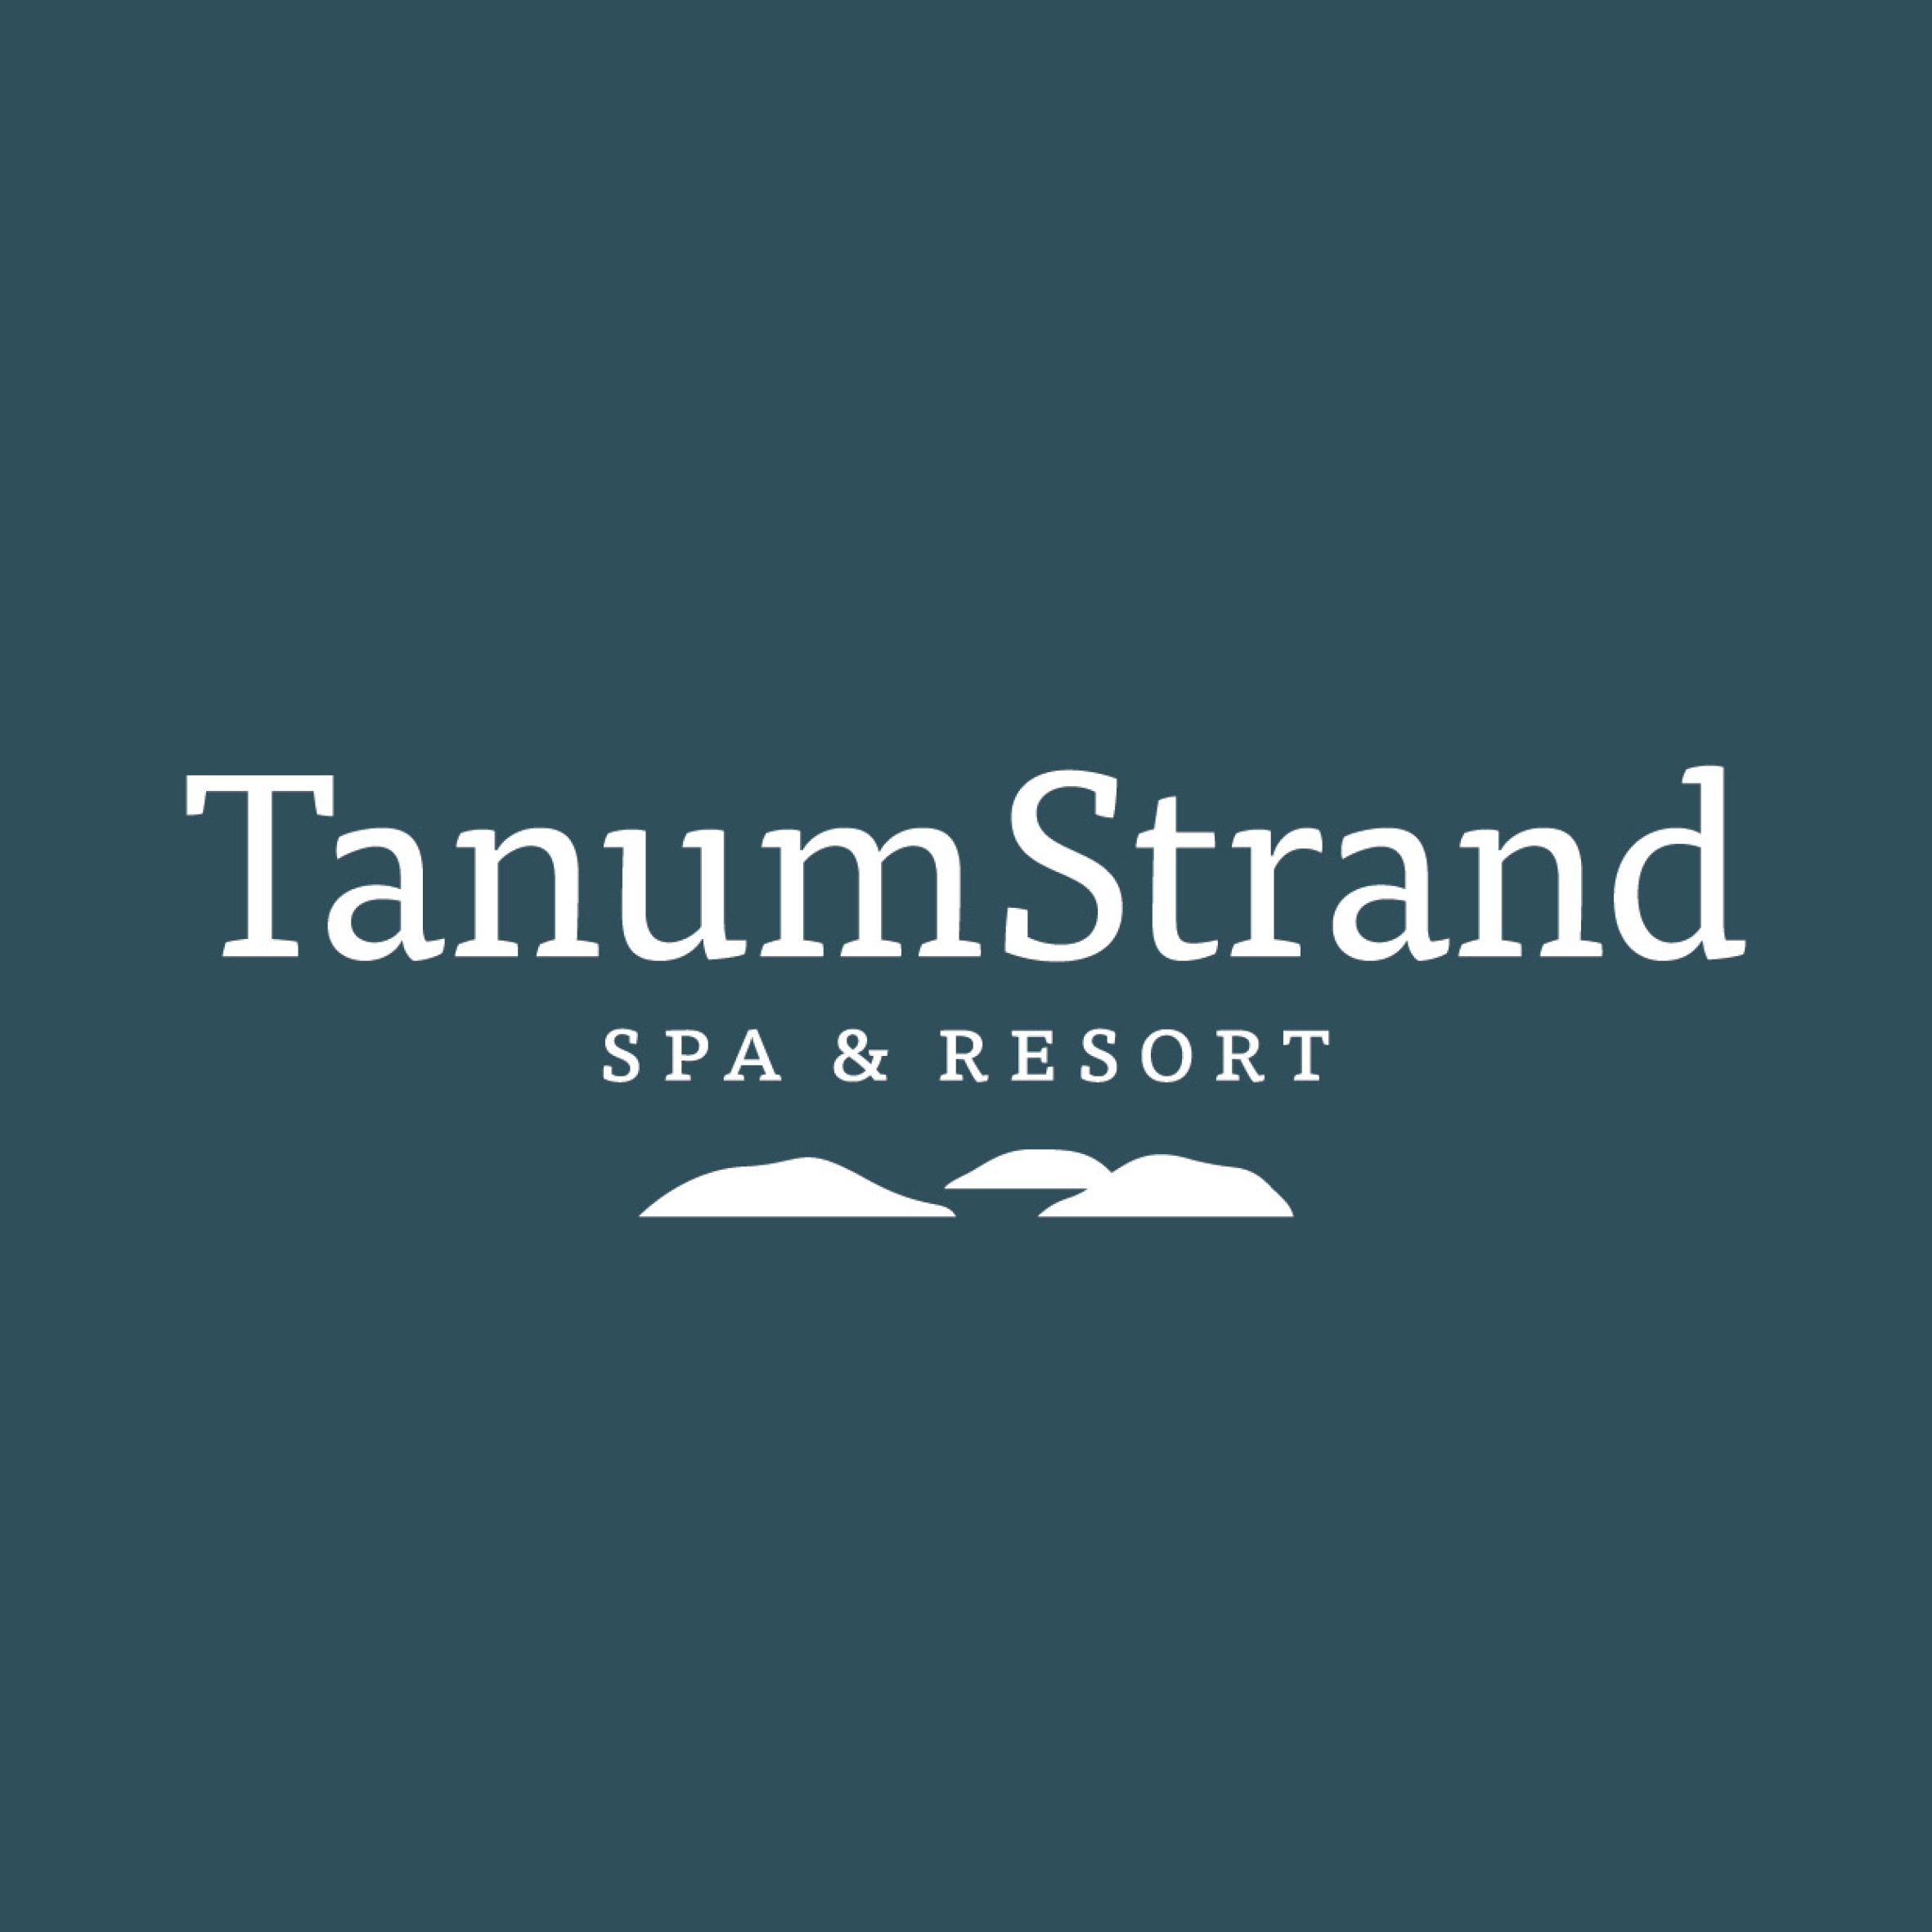 TanumStrand Spa & Resort